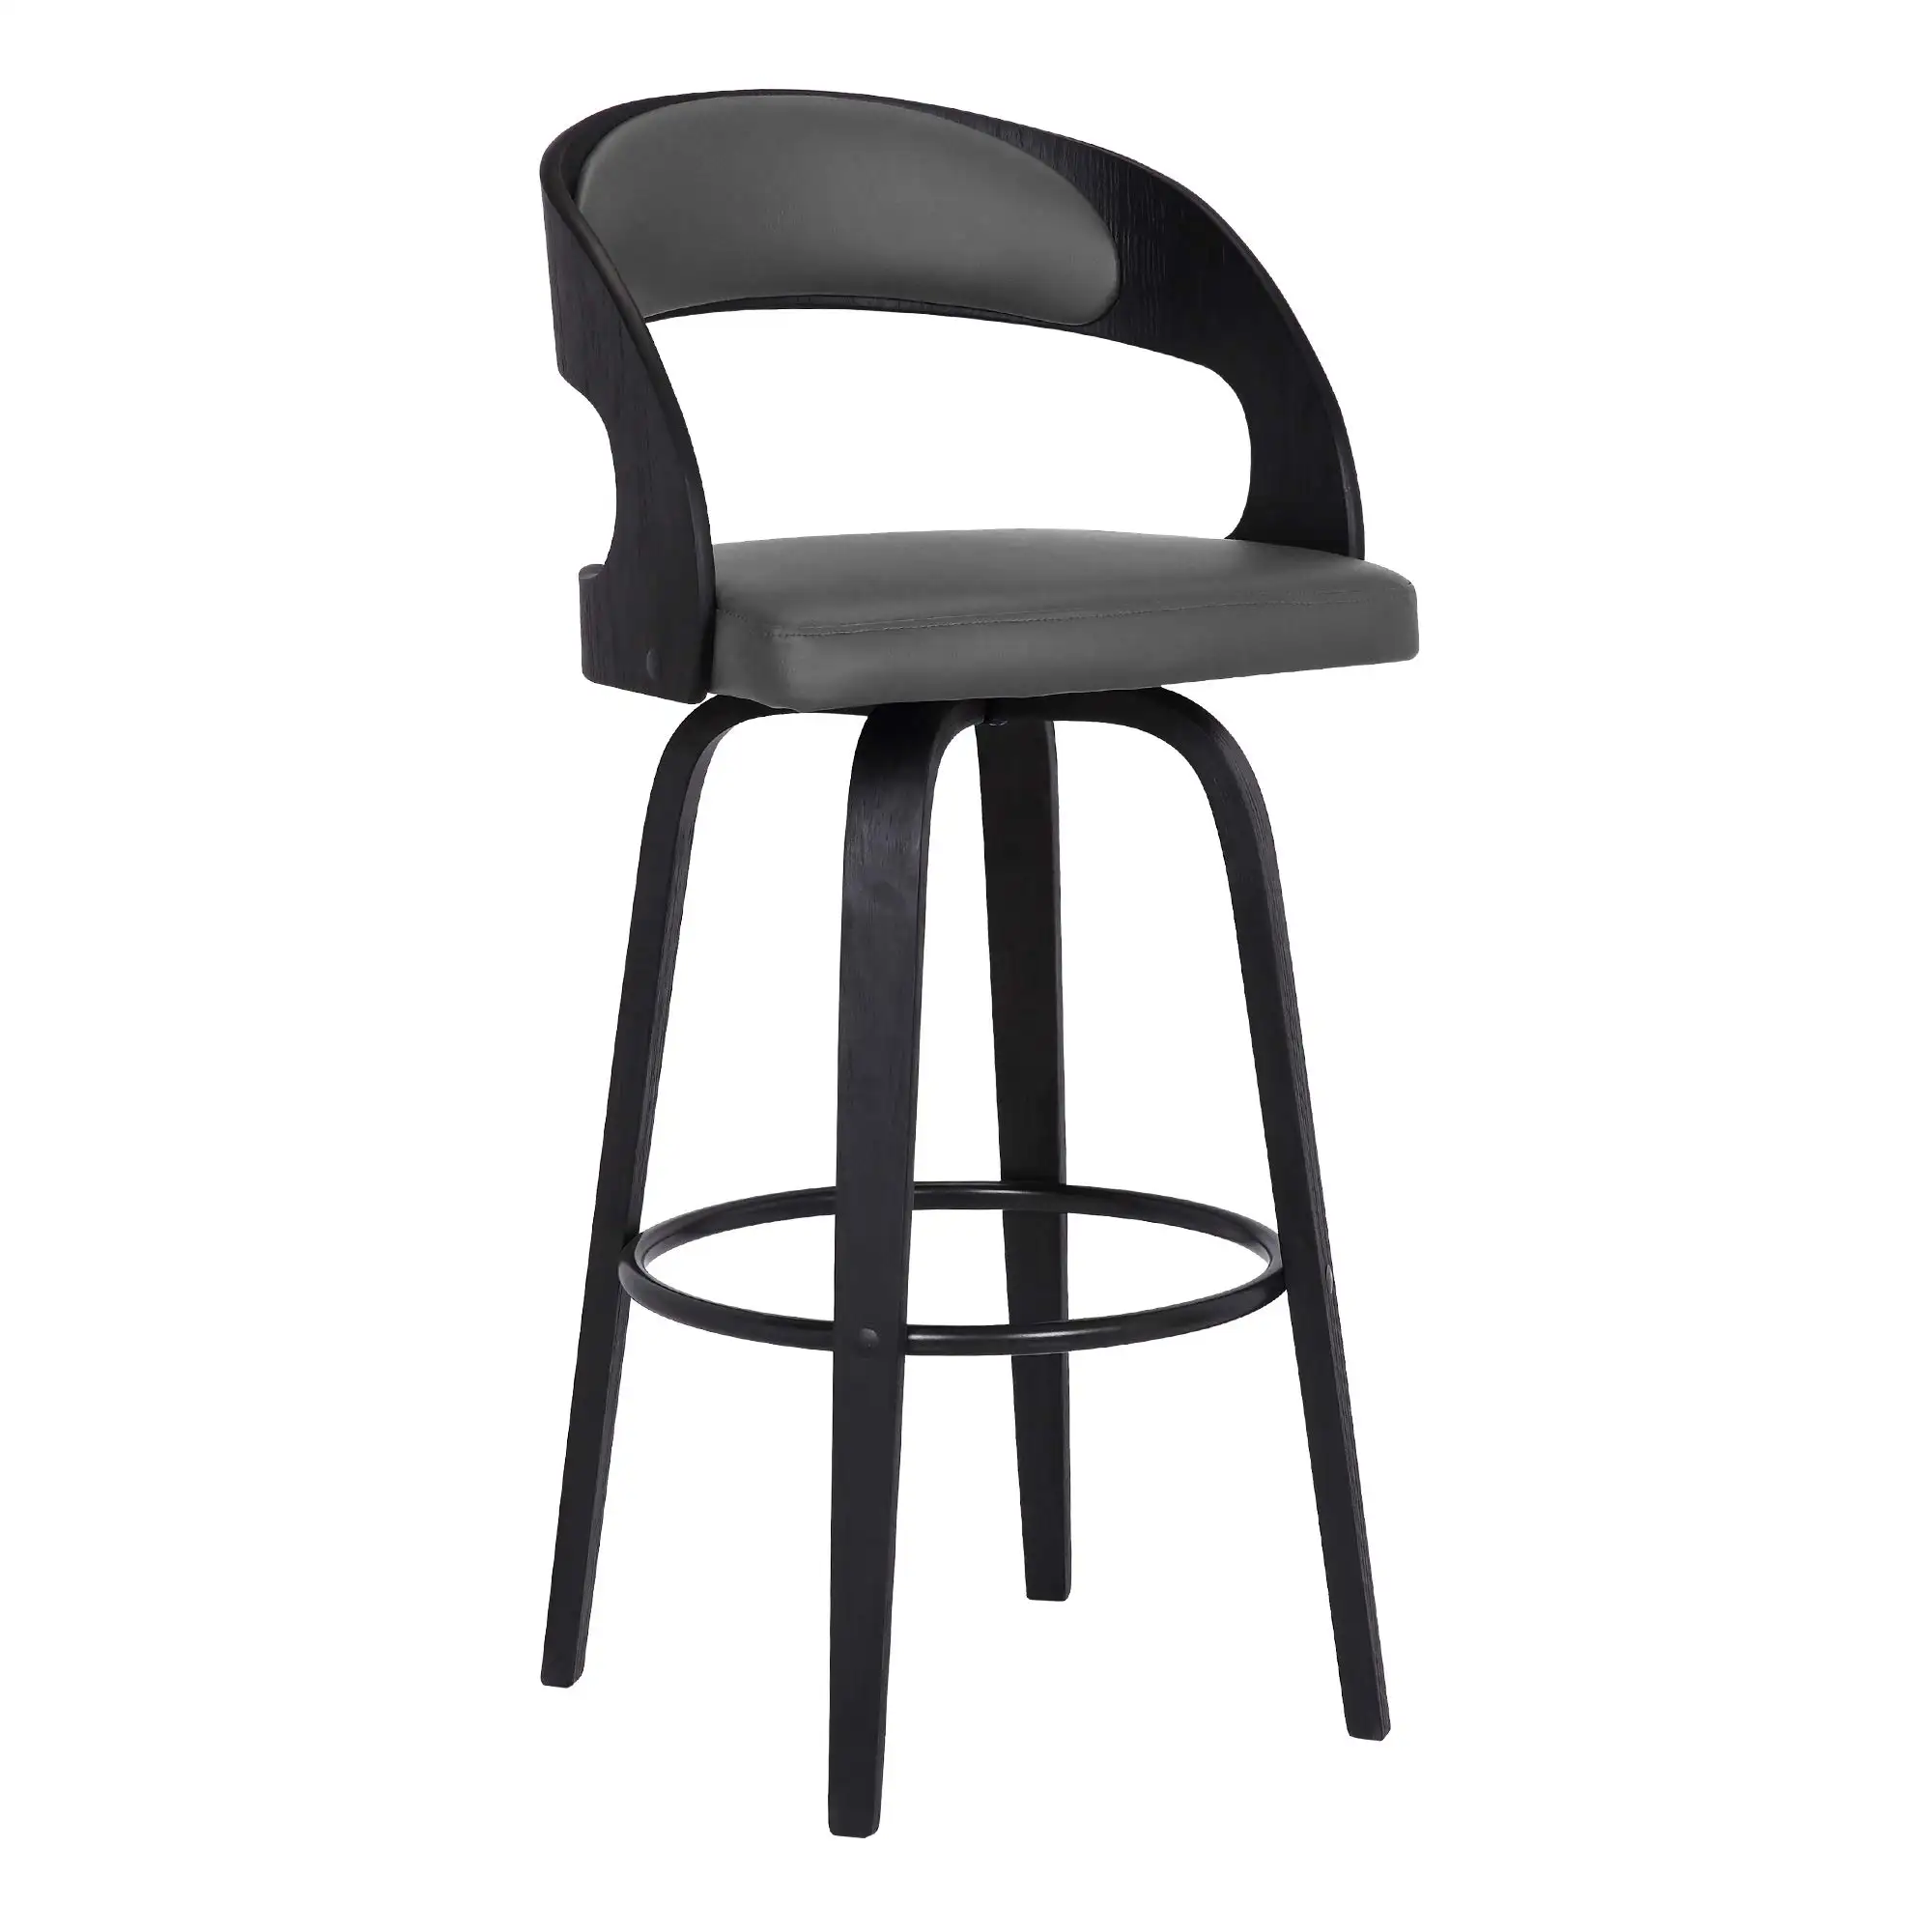 Preço Promocional Counter Height Wooden Bar Chair Stool Jantar Cozinha Bar Cadeiras Contador madeira Bentwood Bar Stool